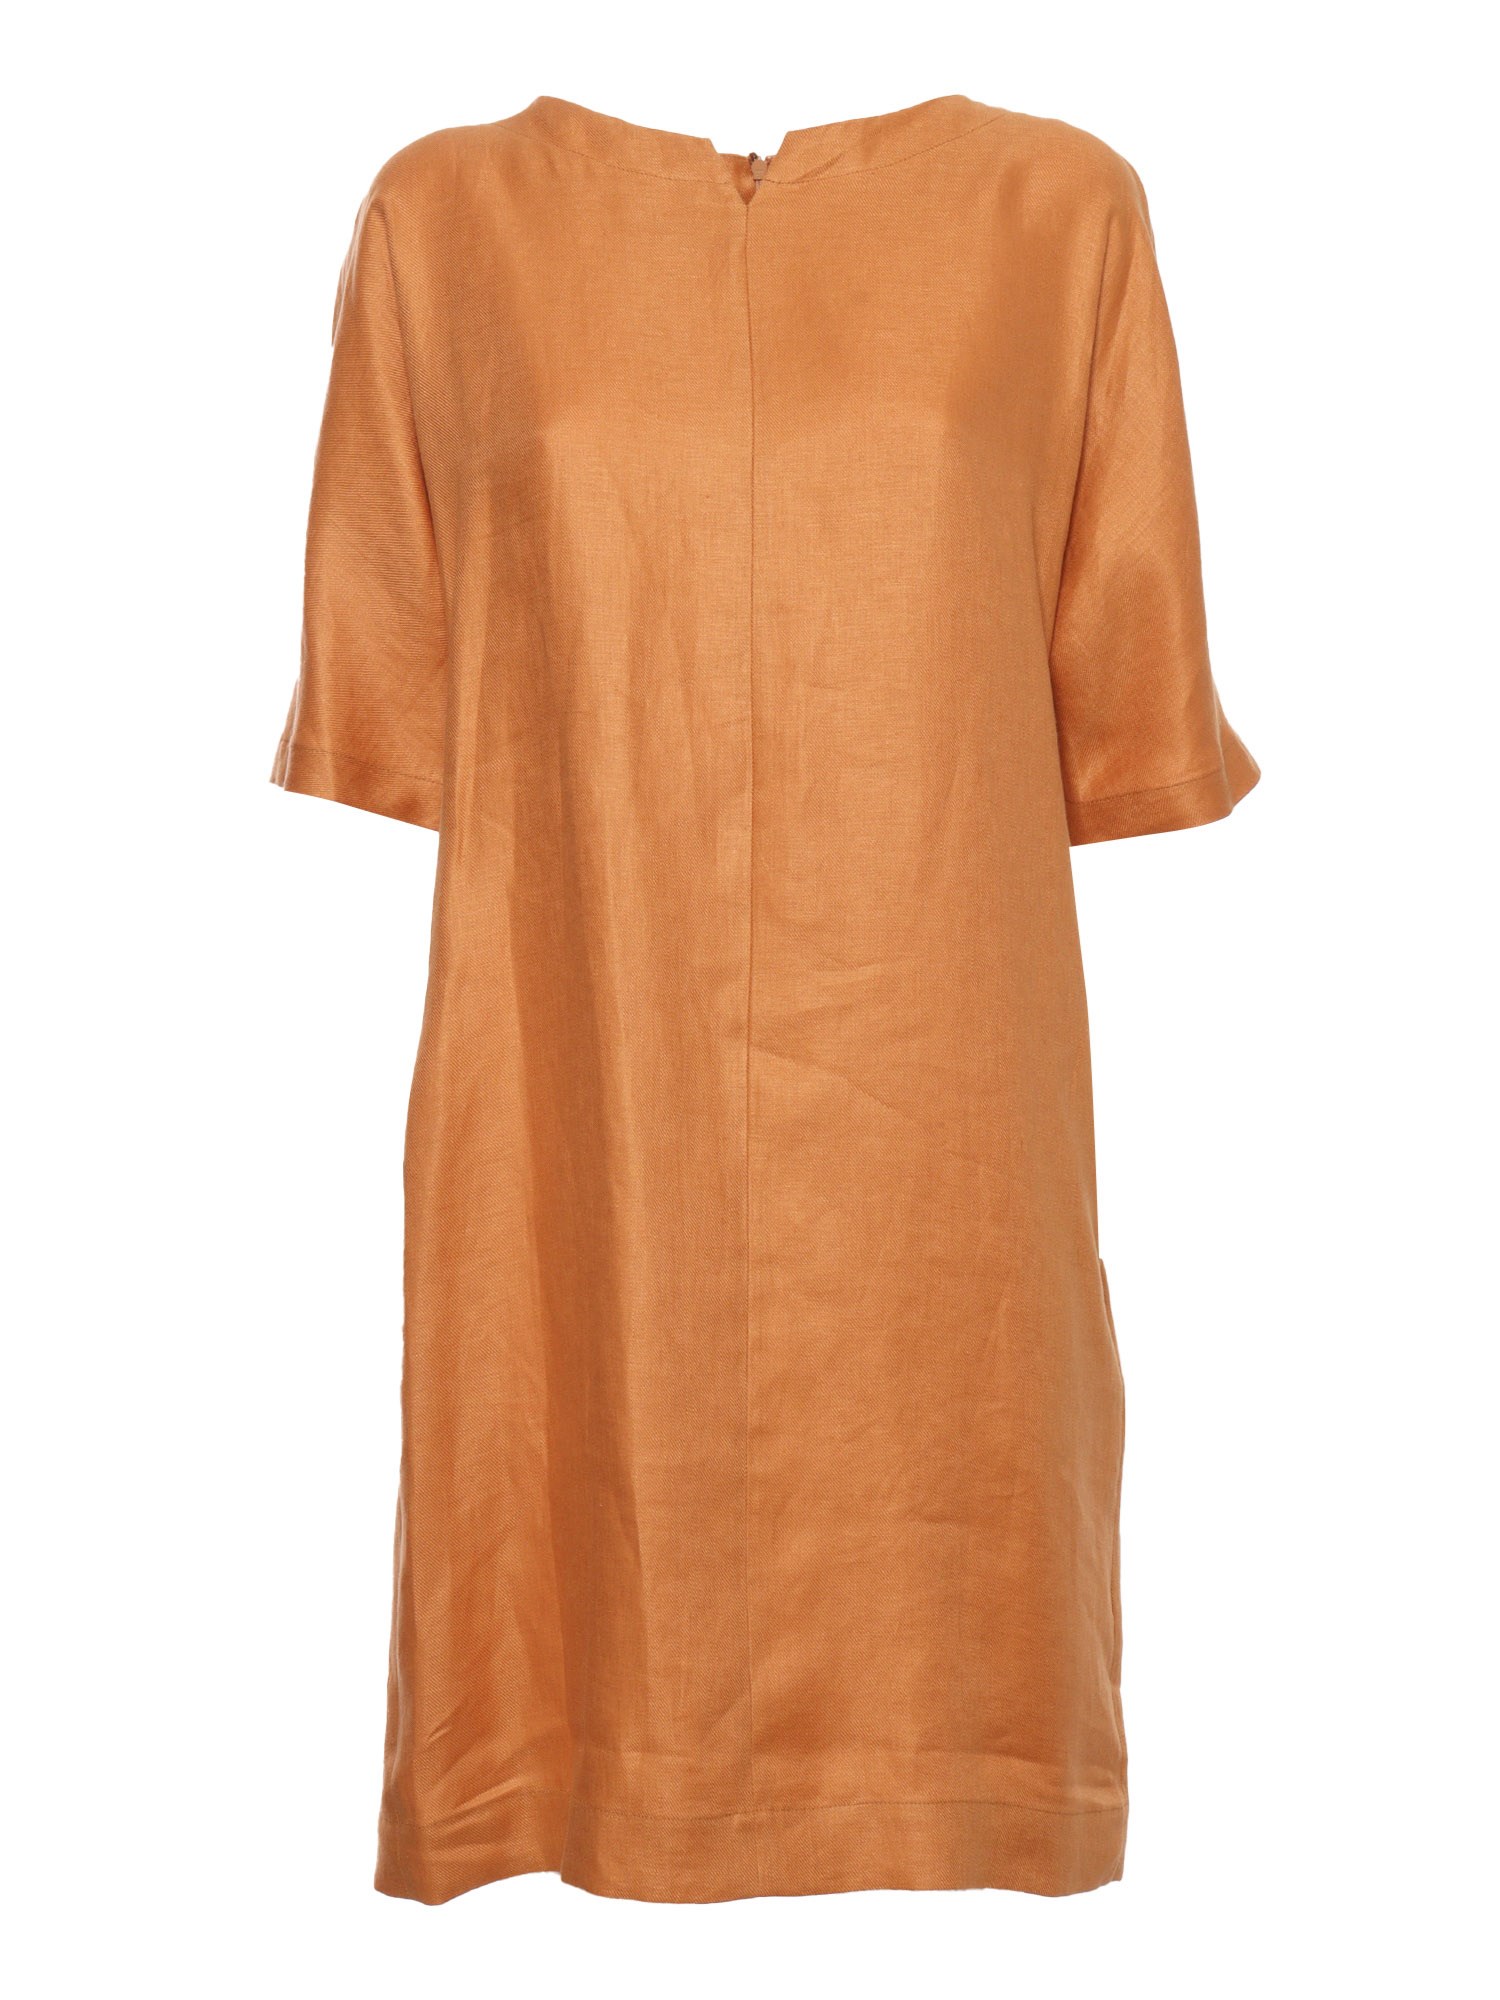 Antonelli Firenze Orange Linen Dress